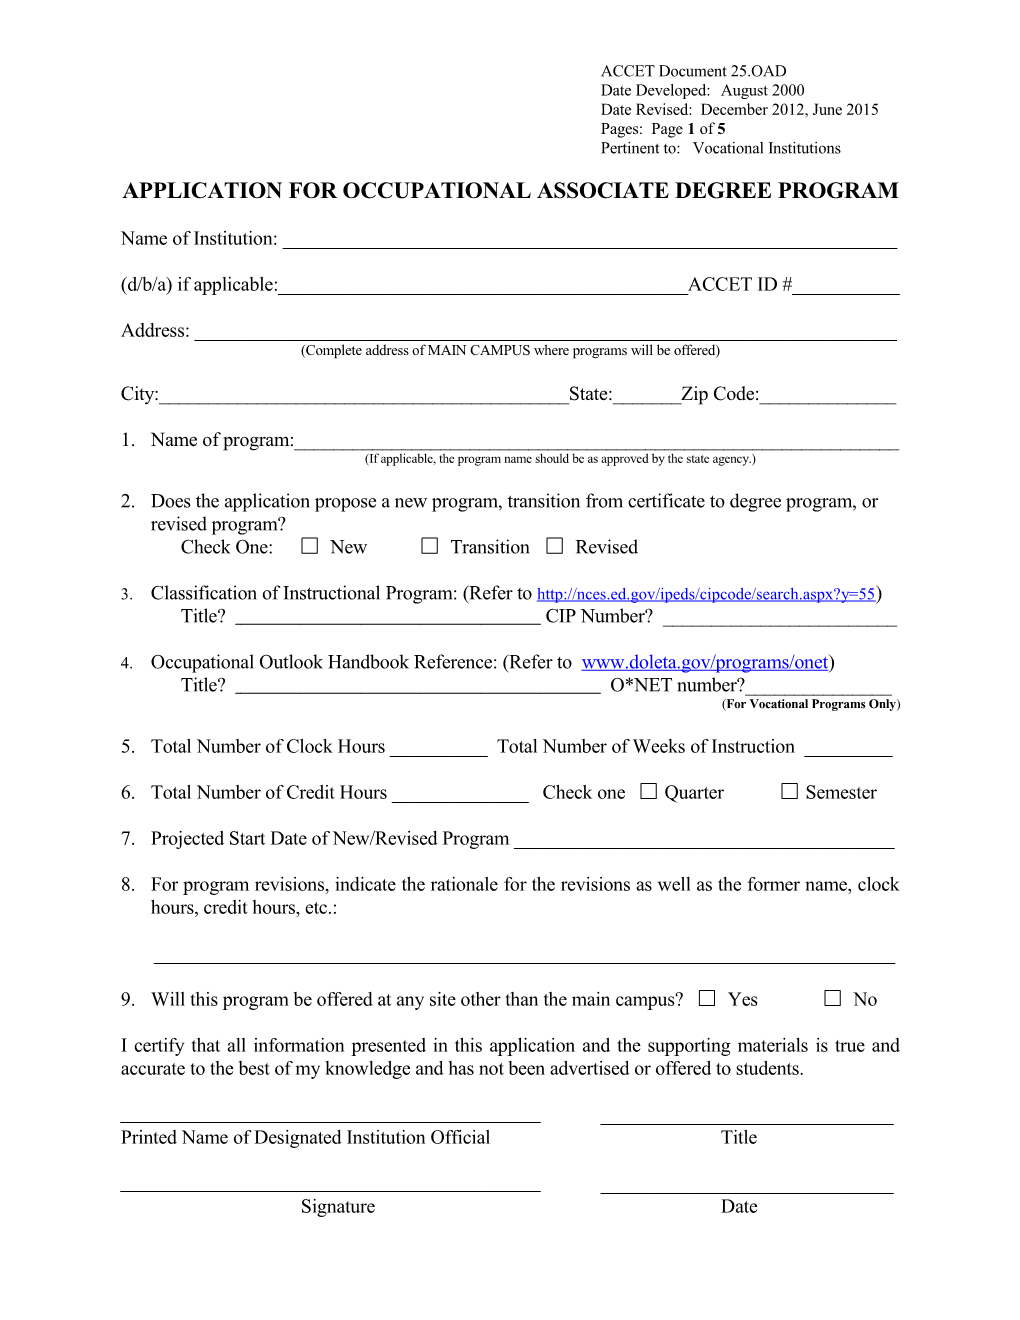 Application for Occupational Associate Degree Program